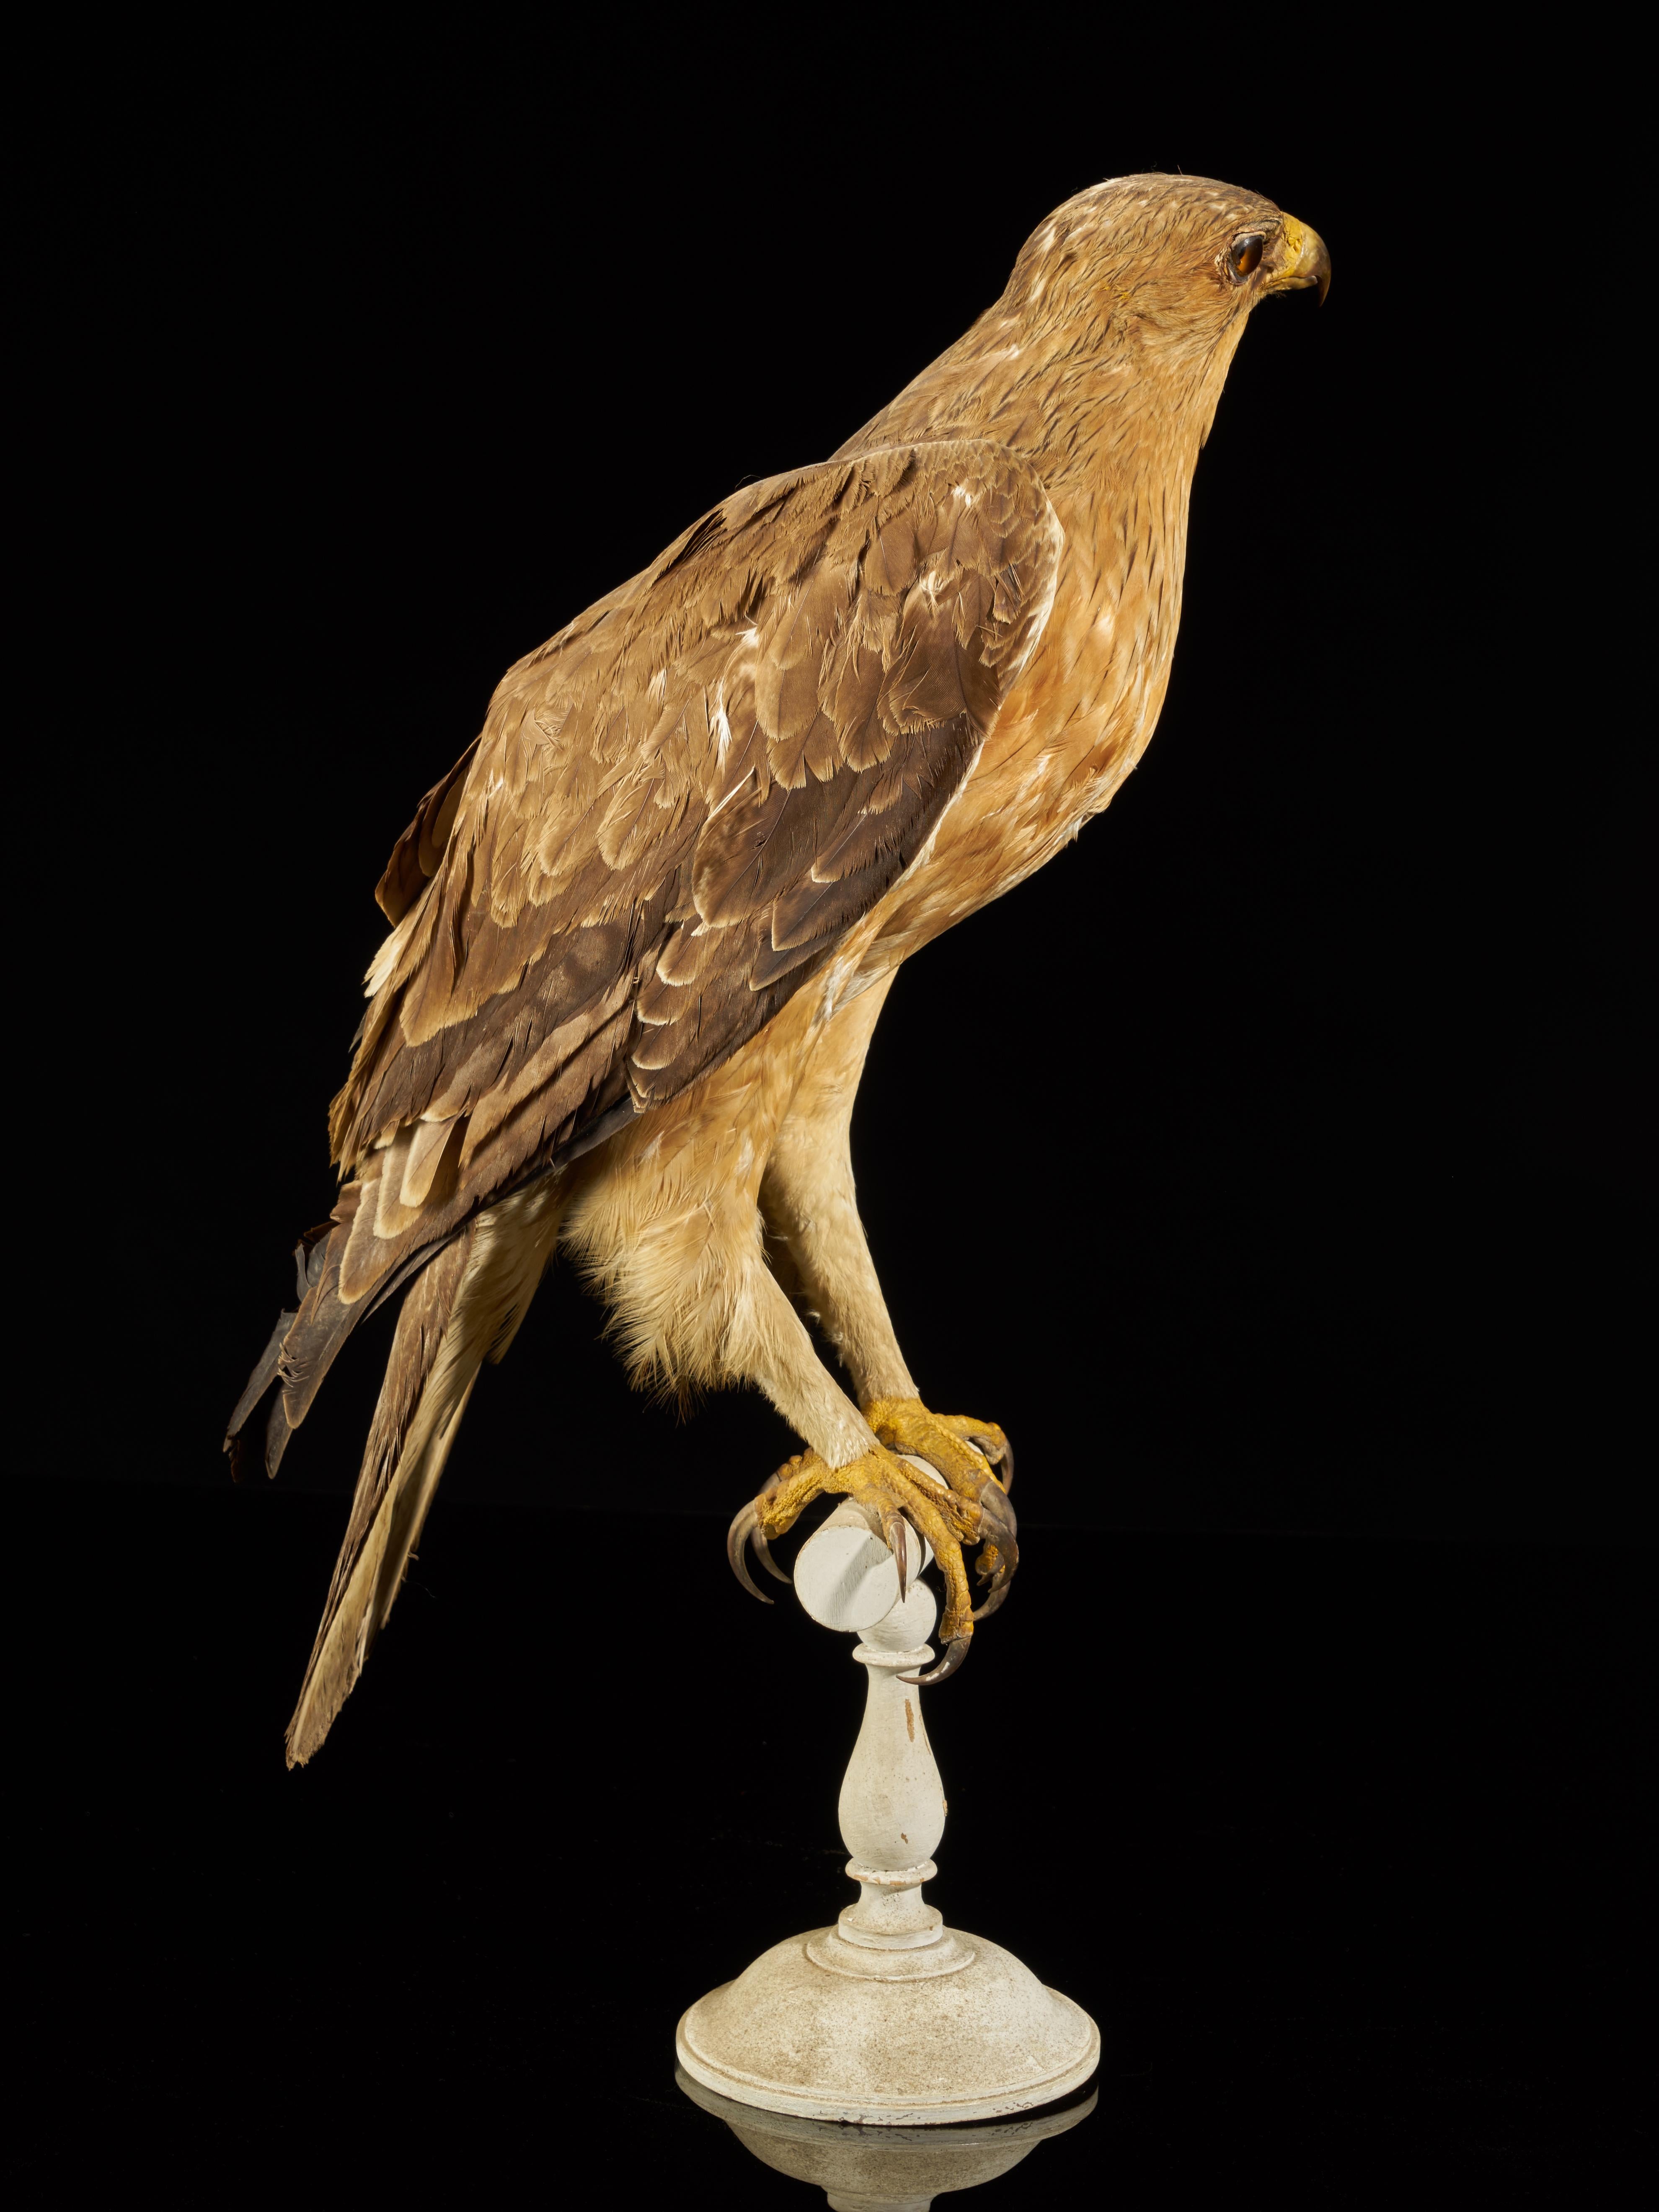 Magnificent Male Bonelli's Eagle on Antique White Museum Stand 1